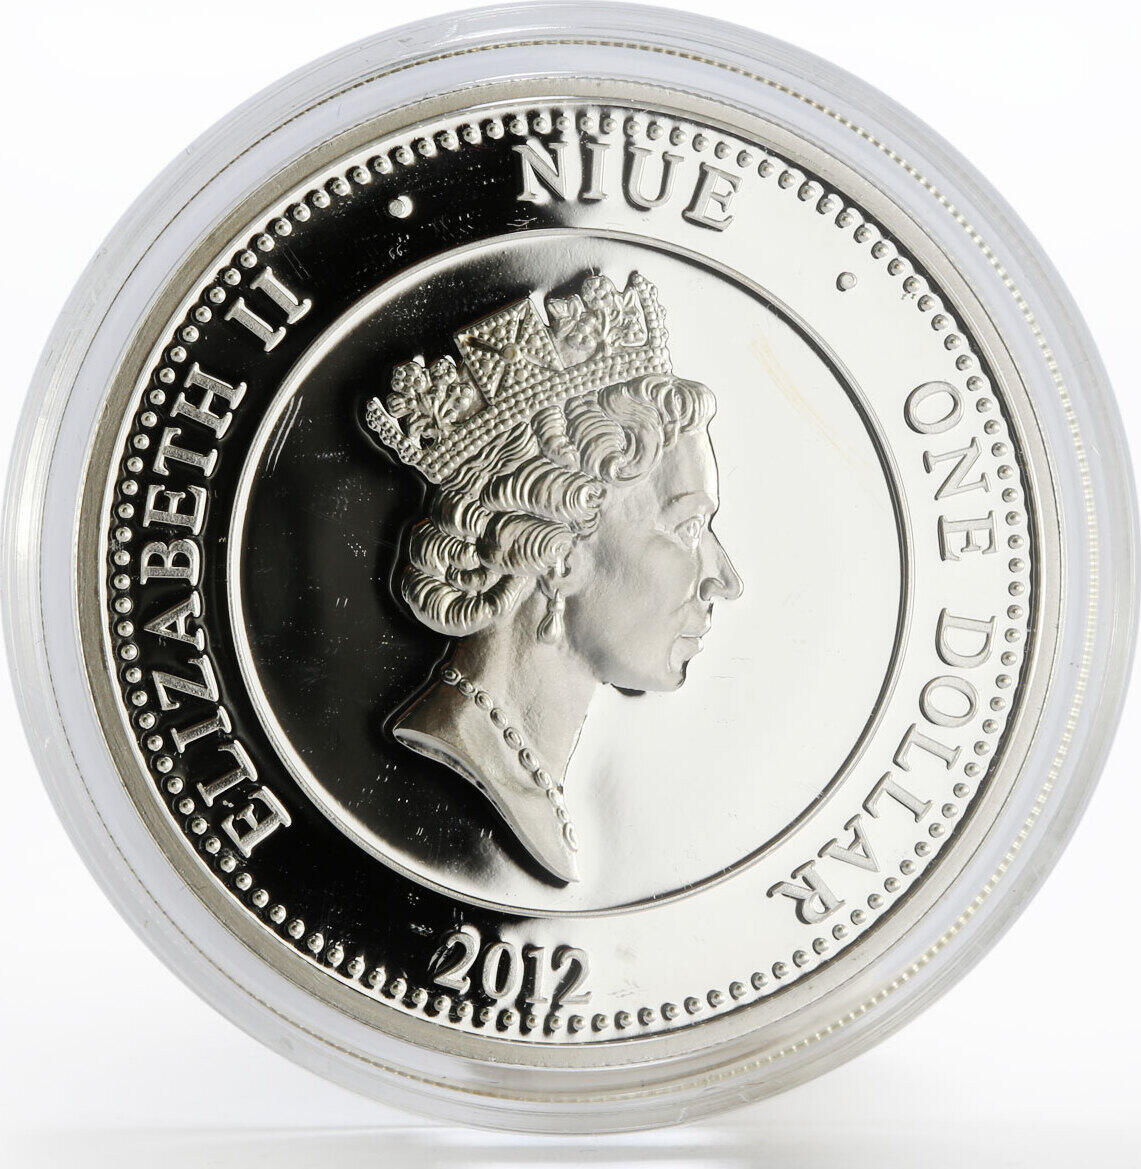 Серебряная монета доллар 2012 Niue. США 1 доллар (Dollar) серебро 2012. Монета 2012 ГМИИ. Доллар серебро купить